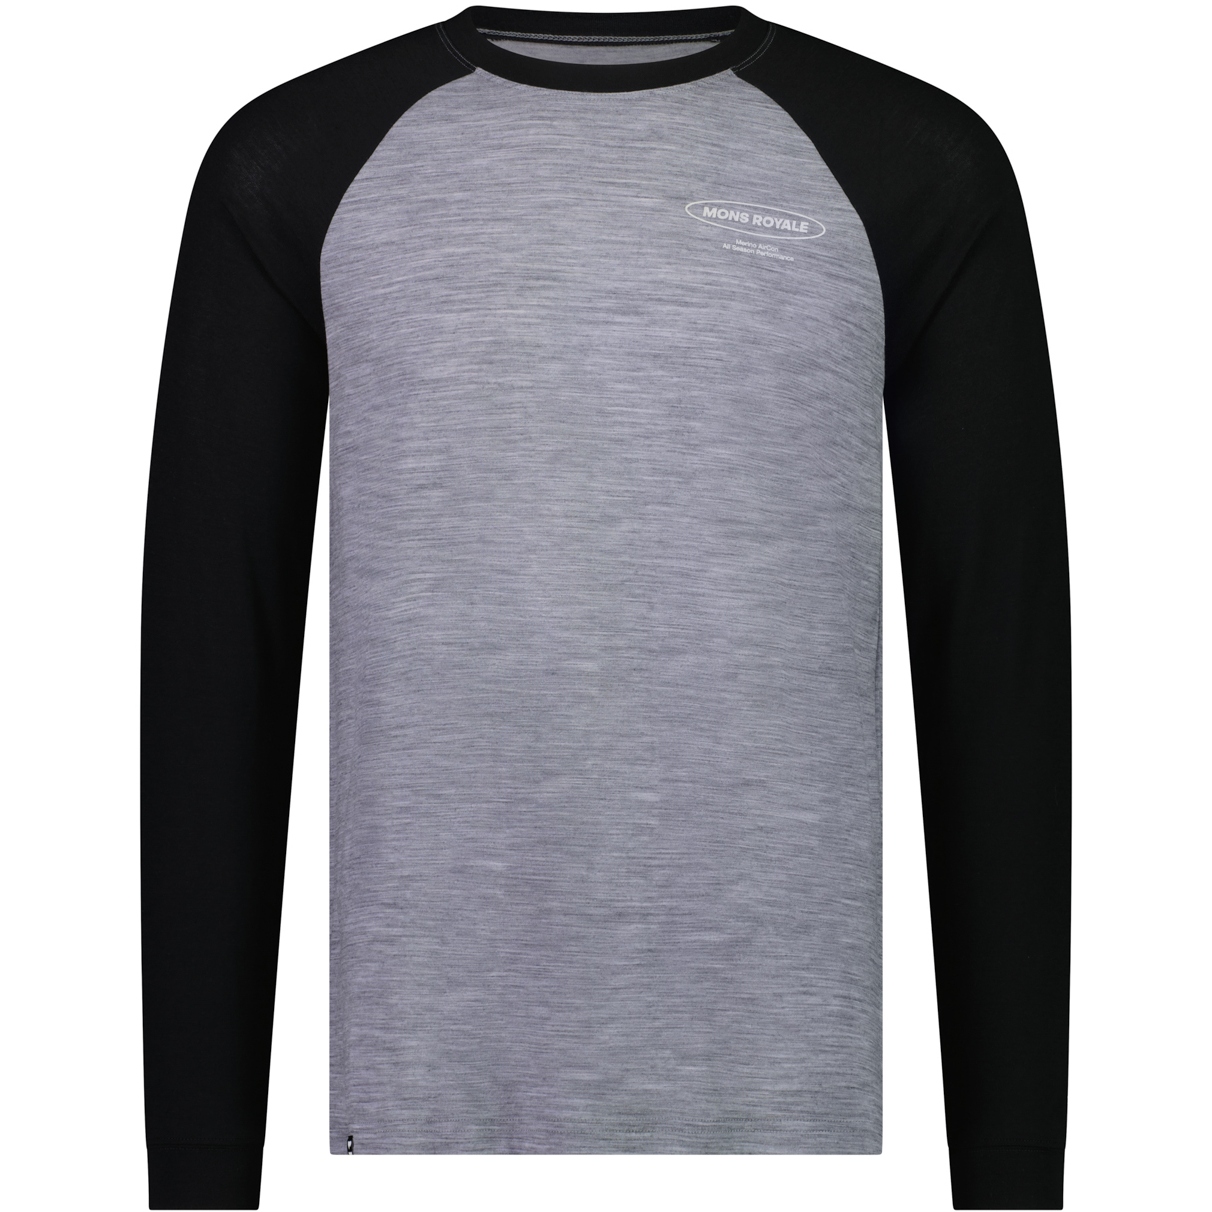 Productfoto van Mons Royale Icon Merino Air-Con Raglan Shirt met Lange Mouwen Heren - grey heather / zwart